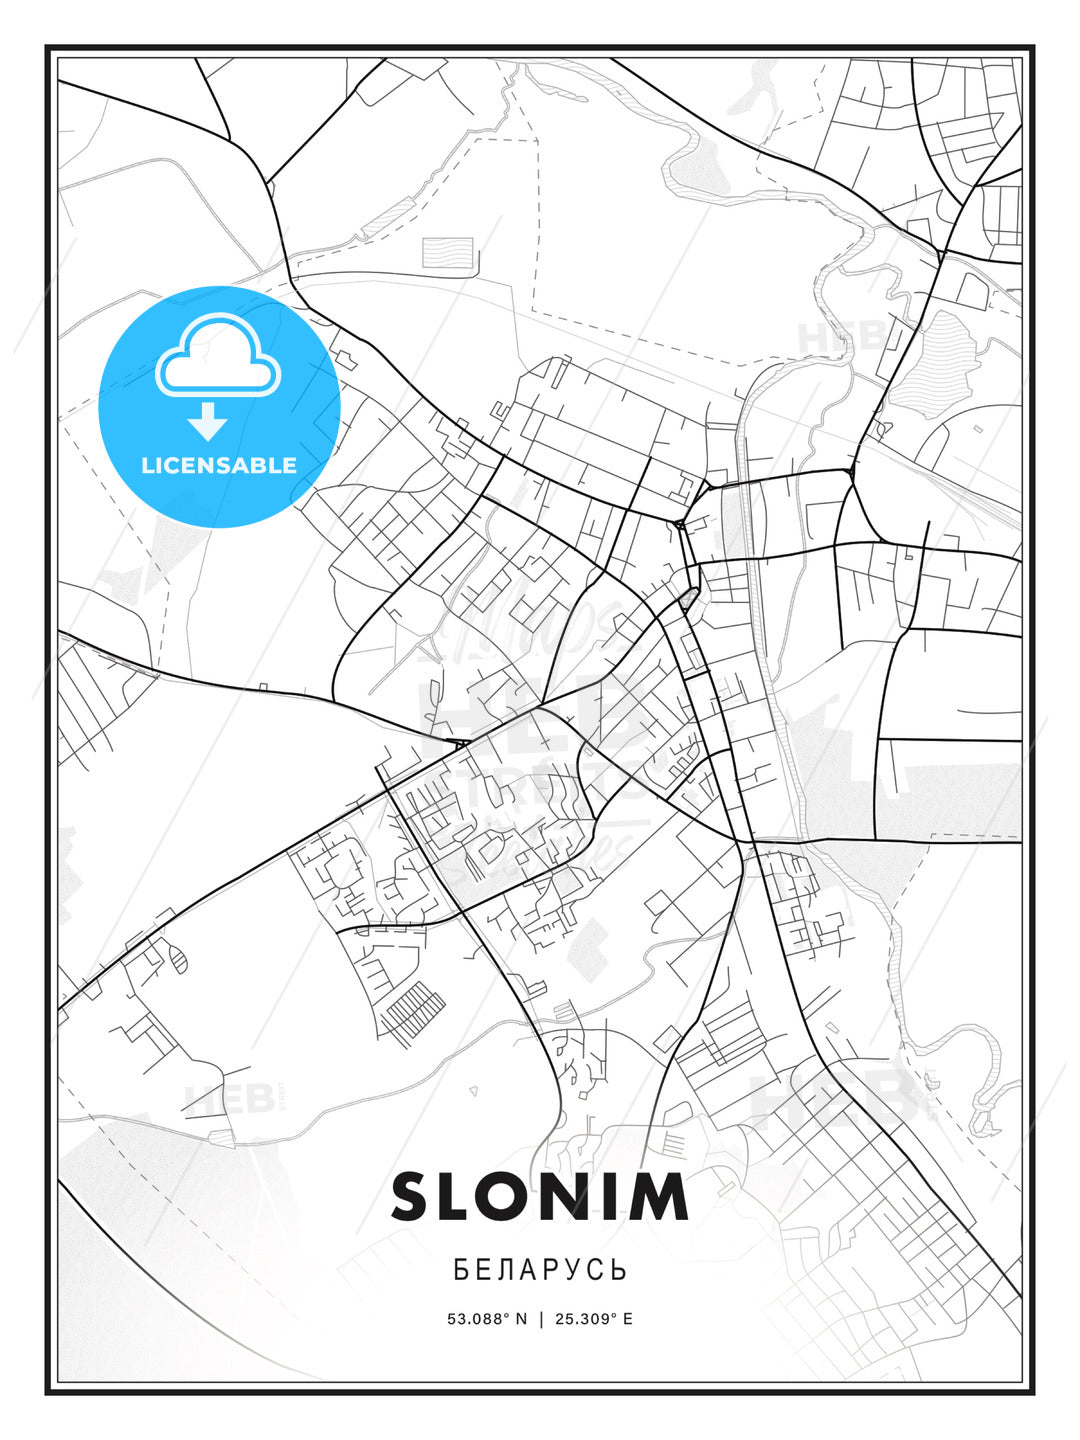 Slonim, Belarus, Modern Print Template in Various Formats - HEBSTREITS Sketches